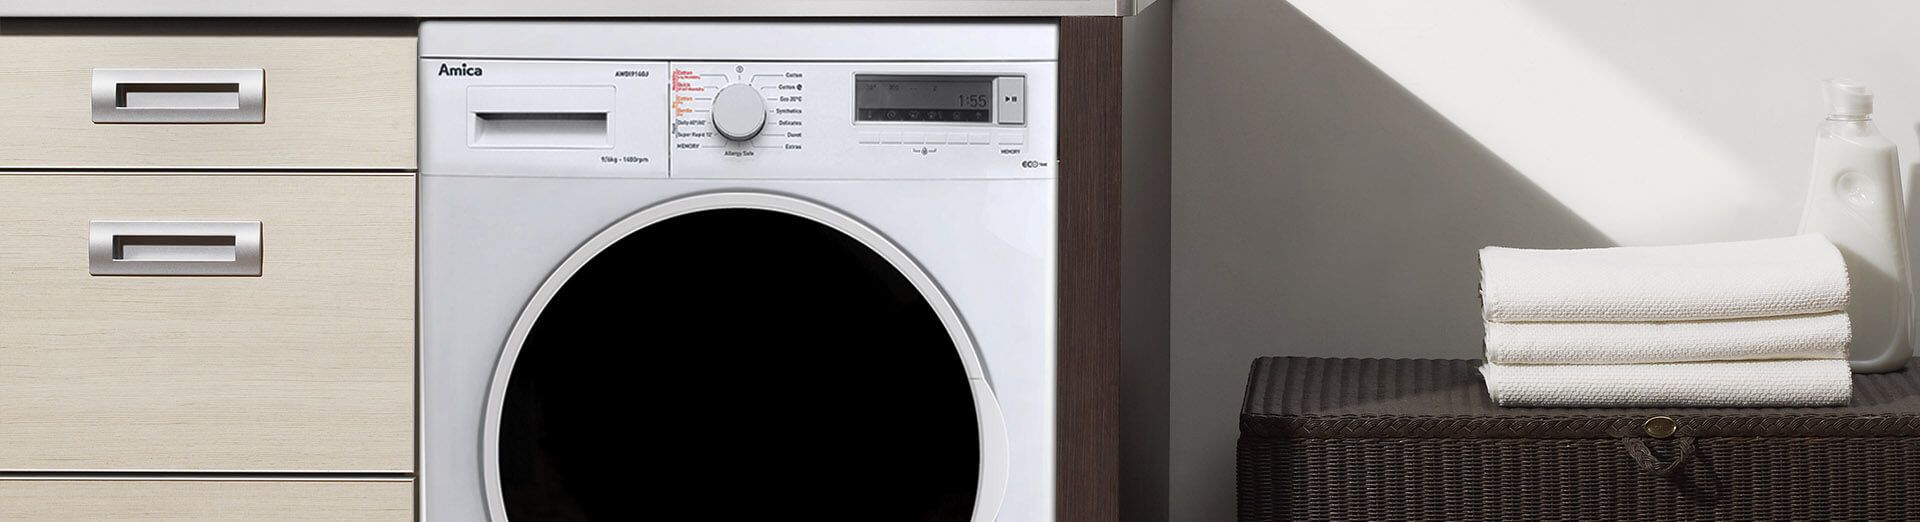 Freestanding washer dryer top image